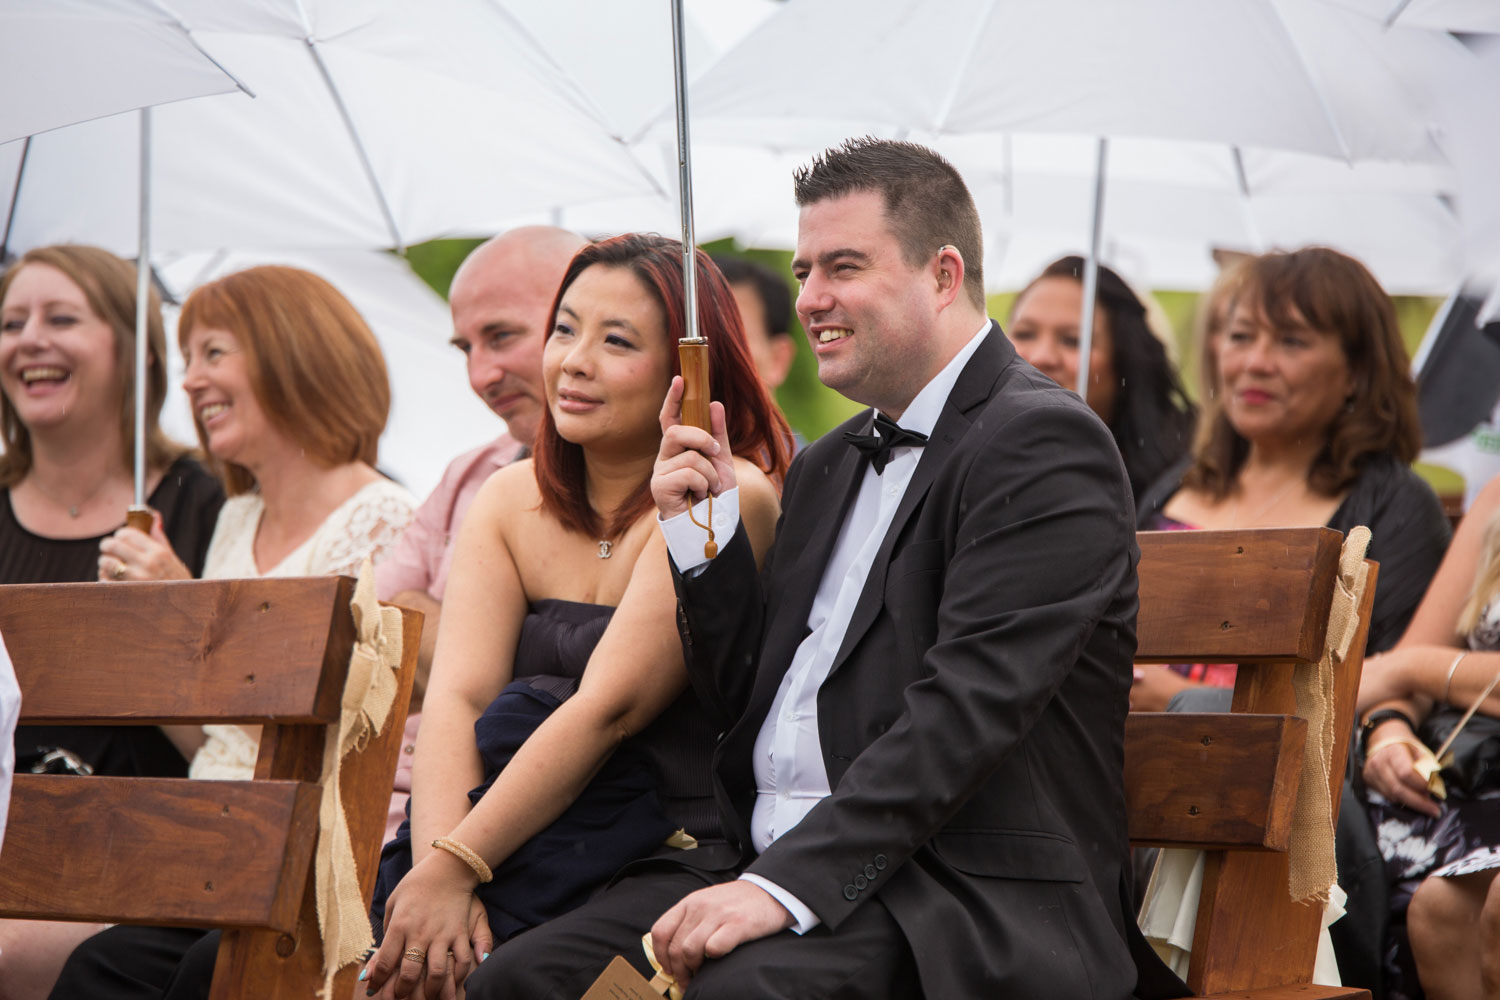 gracehill auckland wedding guests holding an umbrella